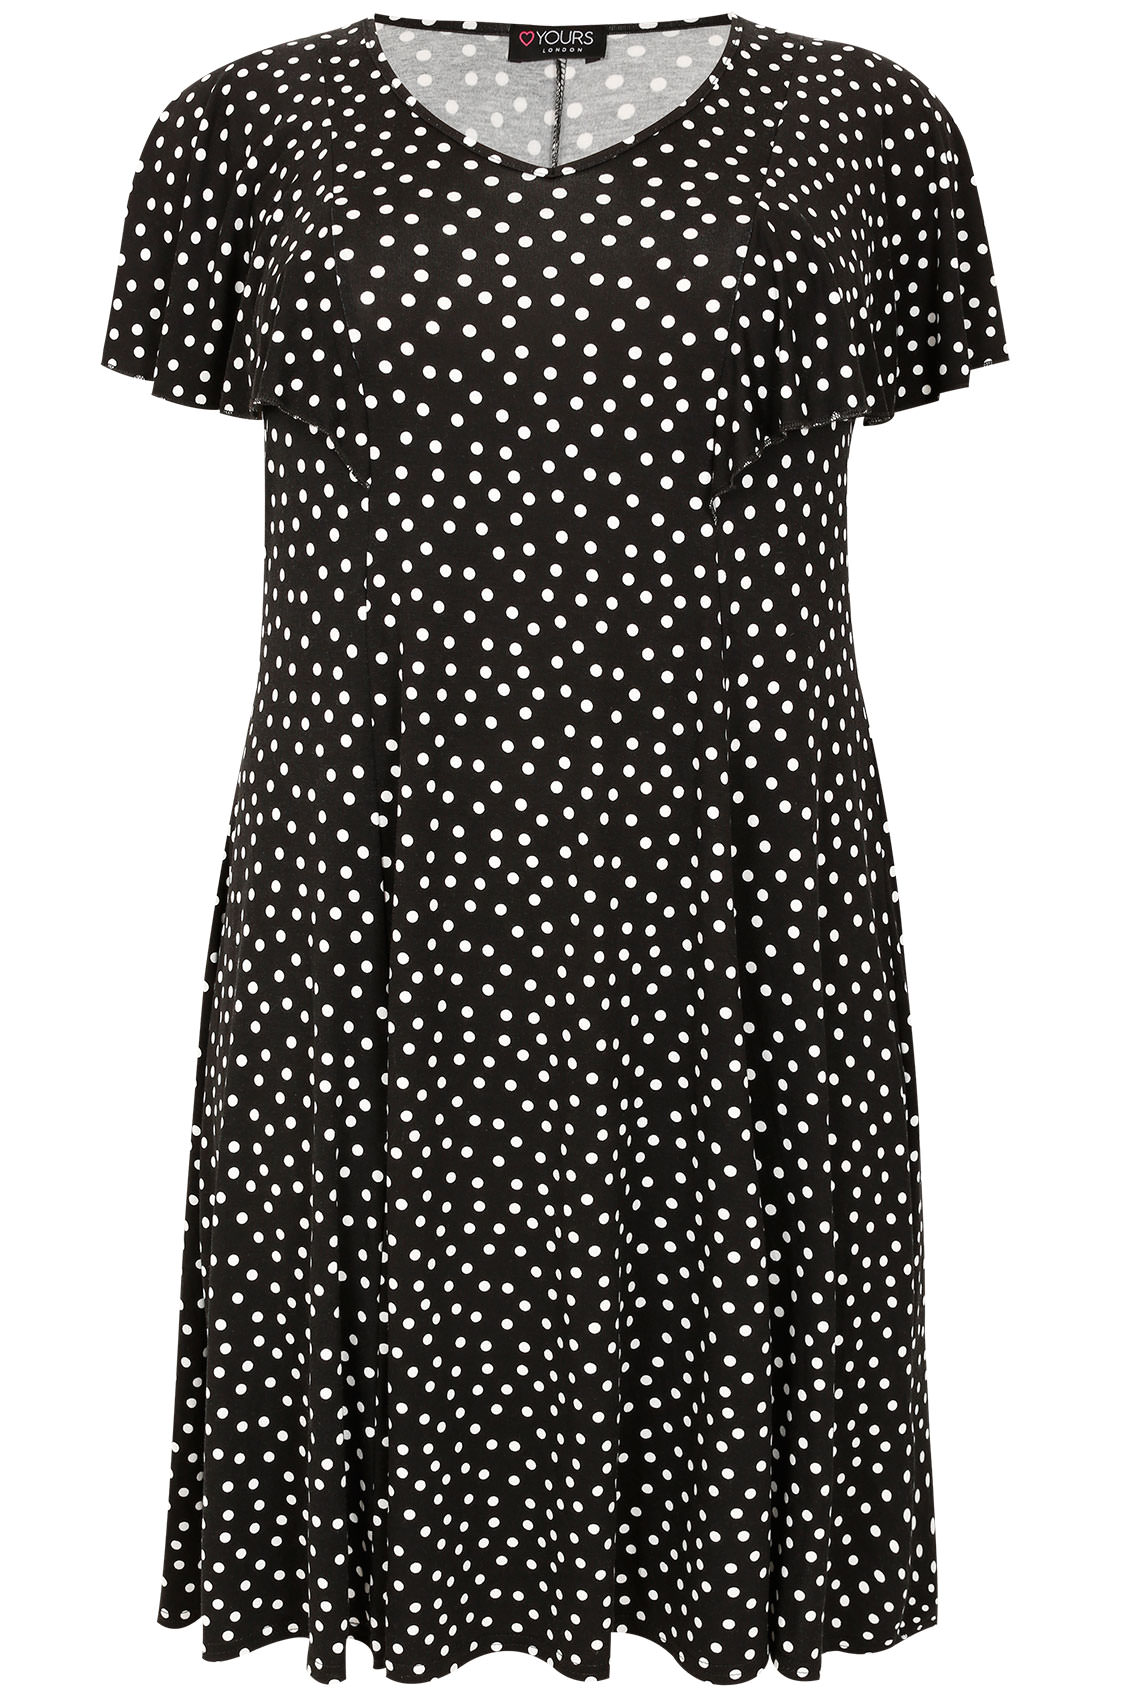 Black & White Polka Dot Frill Dress, Plus size 16 to 32